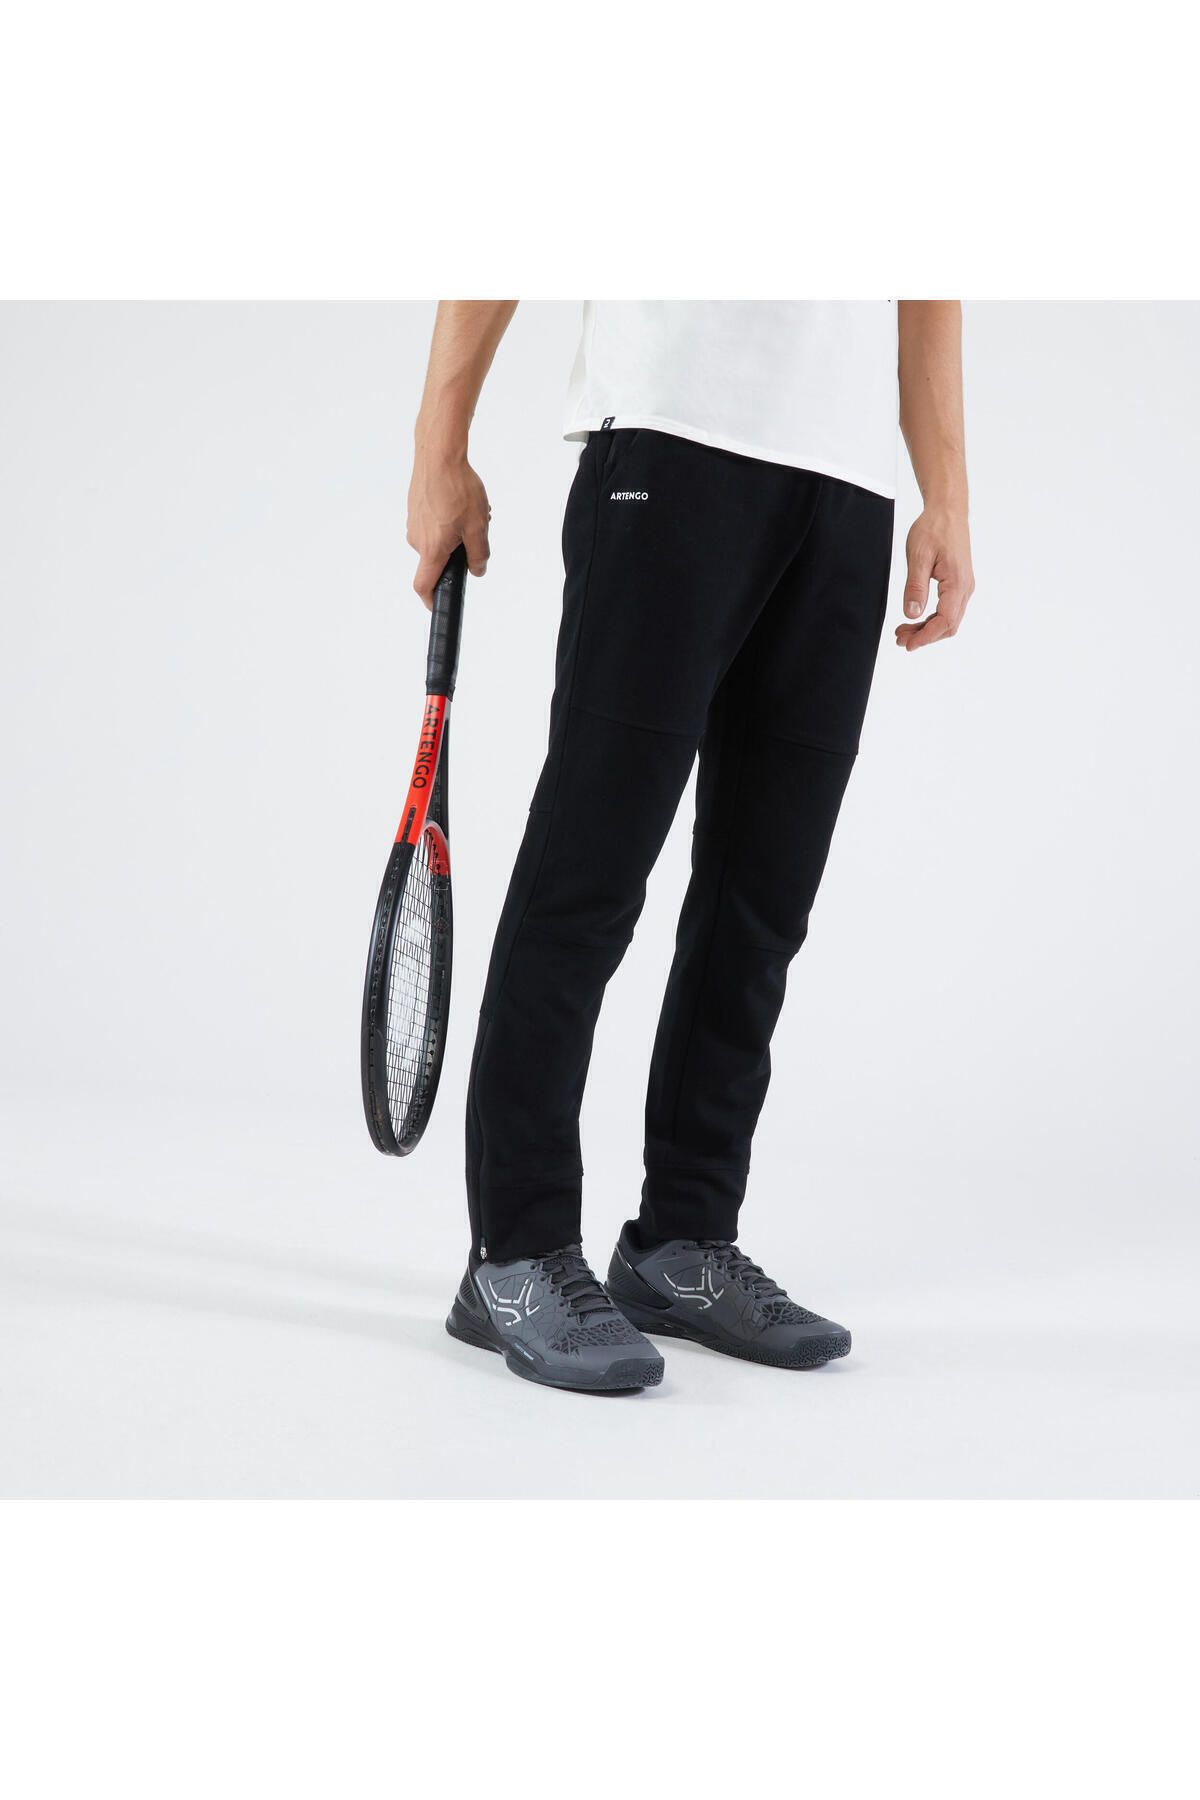 Decathlon Erkek Tenis Eşofman Altı - Siyah - Soft